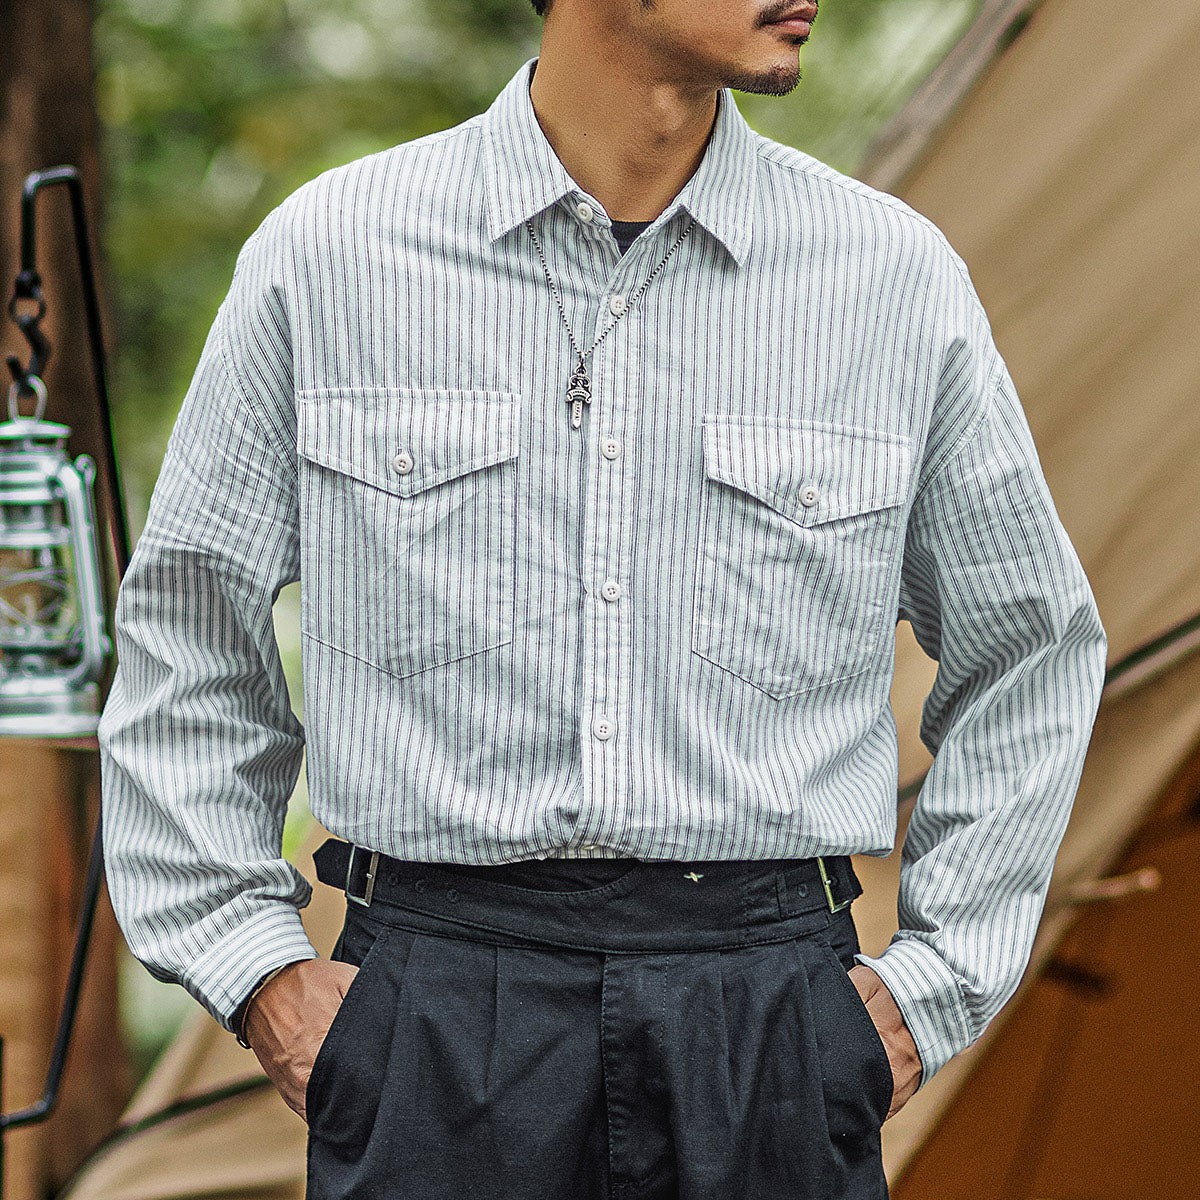 Men's American Retro Camping Outdoor White Pinstriped Shirt